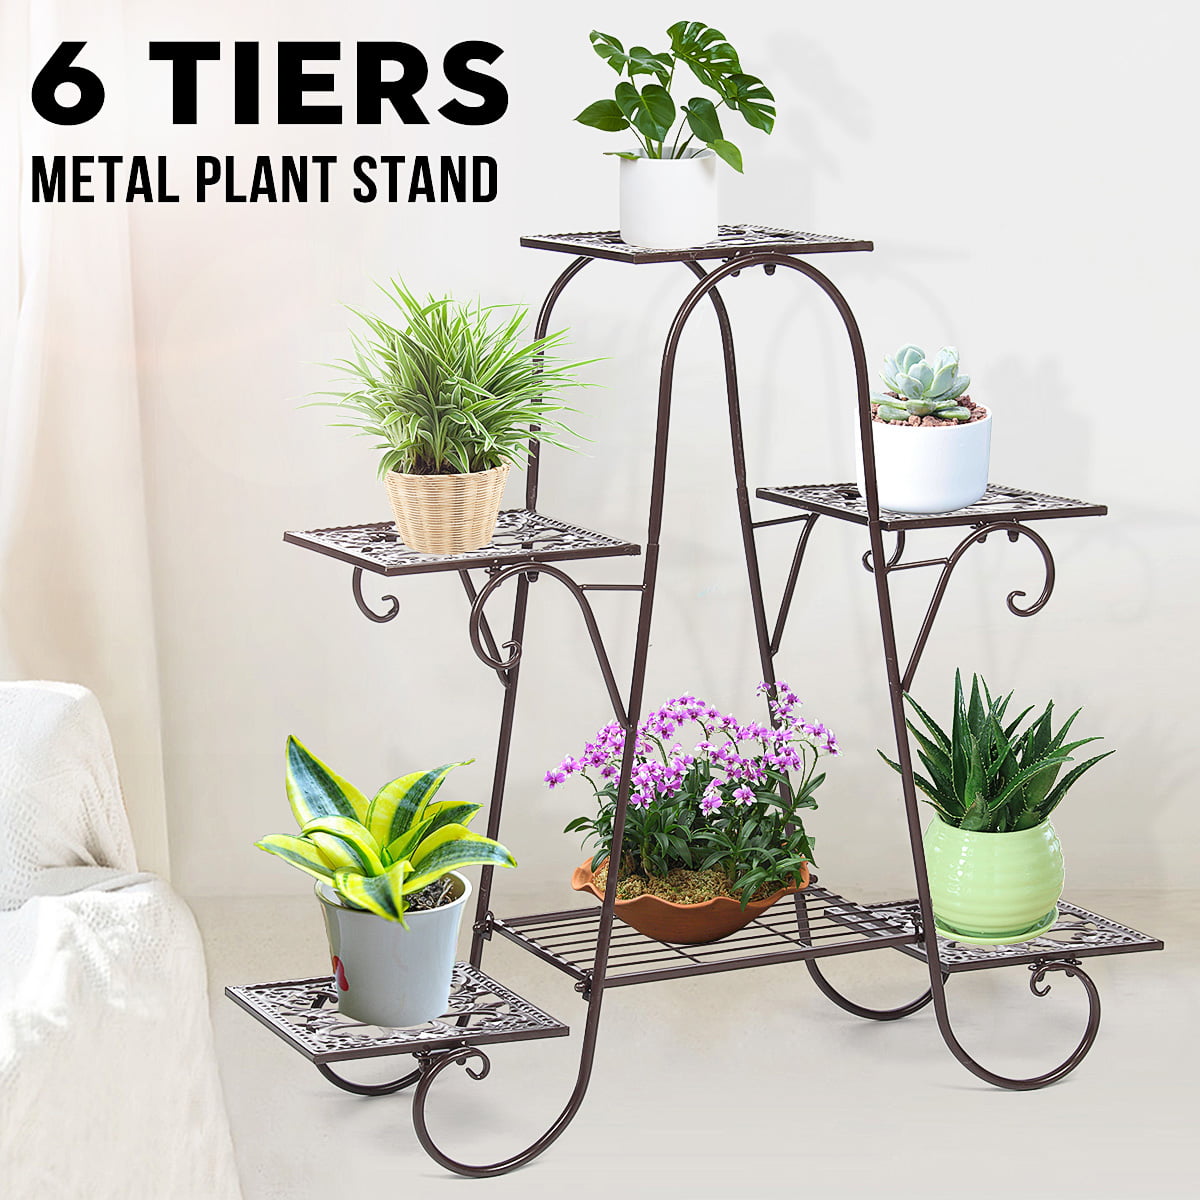 6 Tier Metal Plant Stand Flower Pot Holder Self Rack Display Garden Patio Decor 